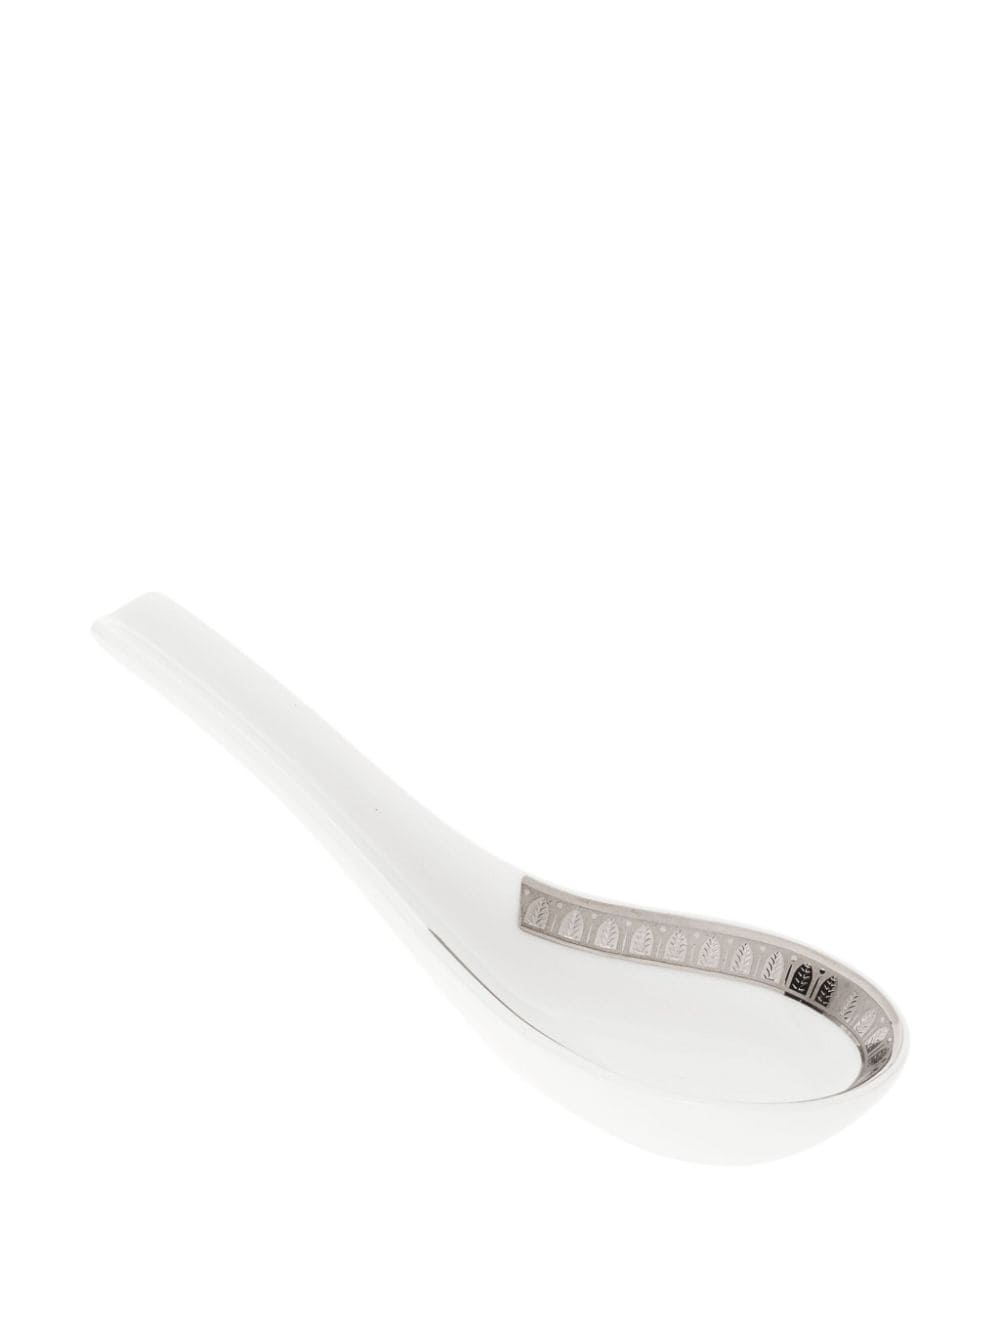 Christofle Malmaison Porcelain Chinese Spoon In White